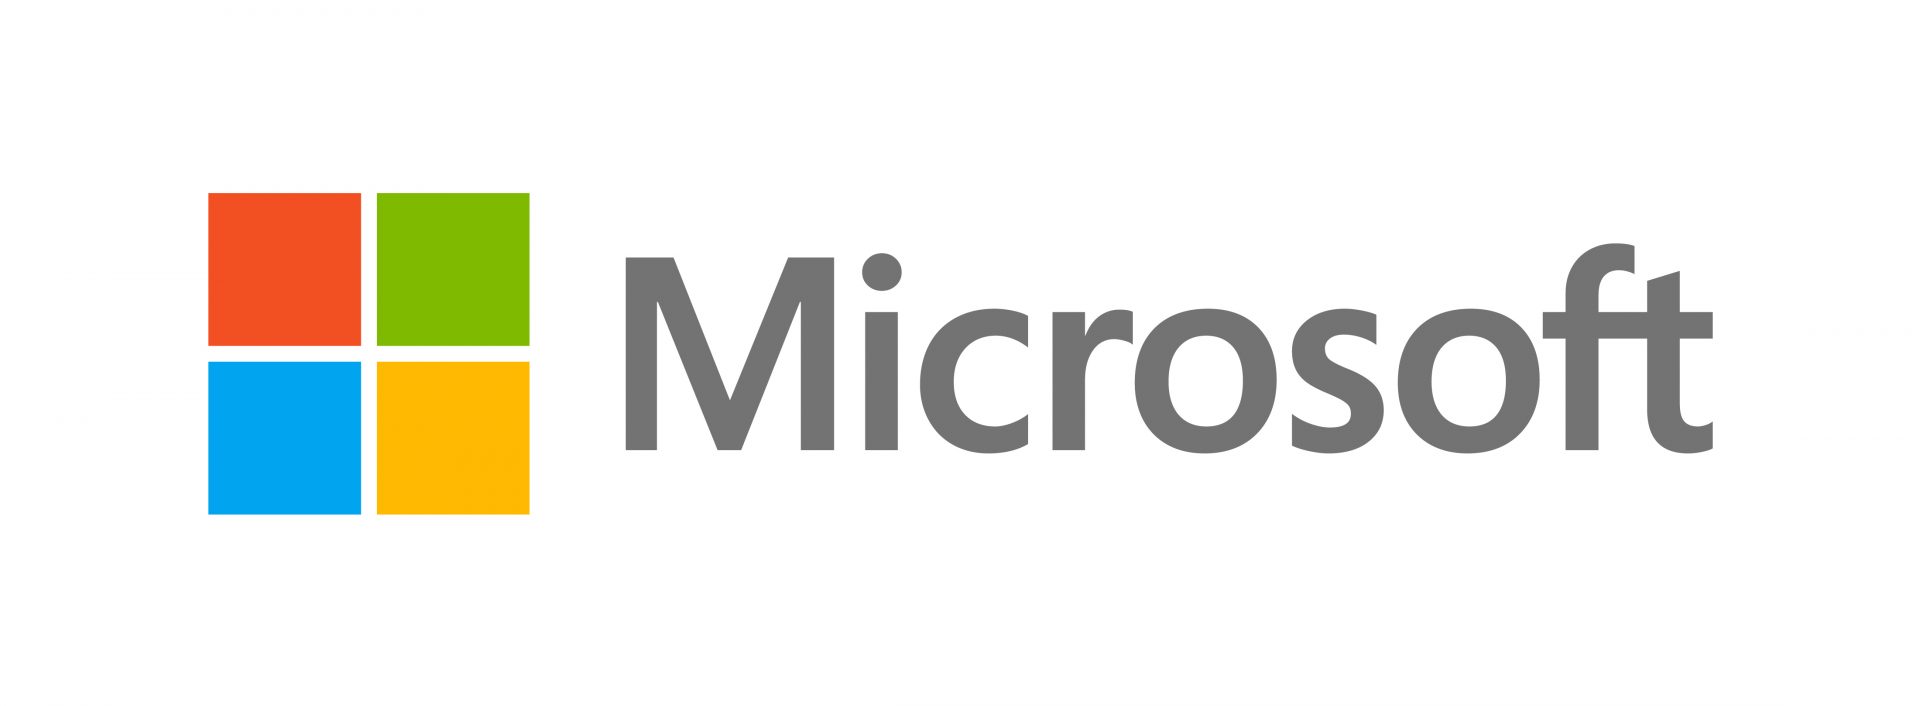 8867.Microsoft_5F00_Logo_2D00_for_2D00_screen-1920x706